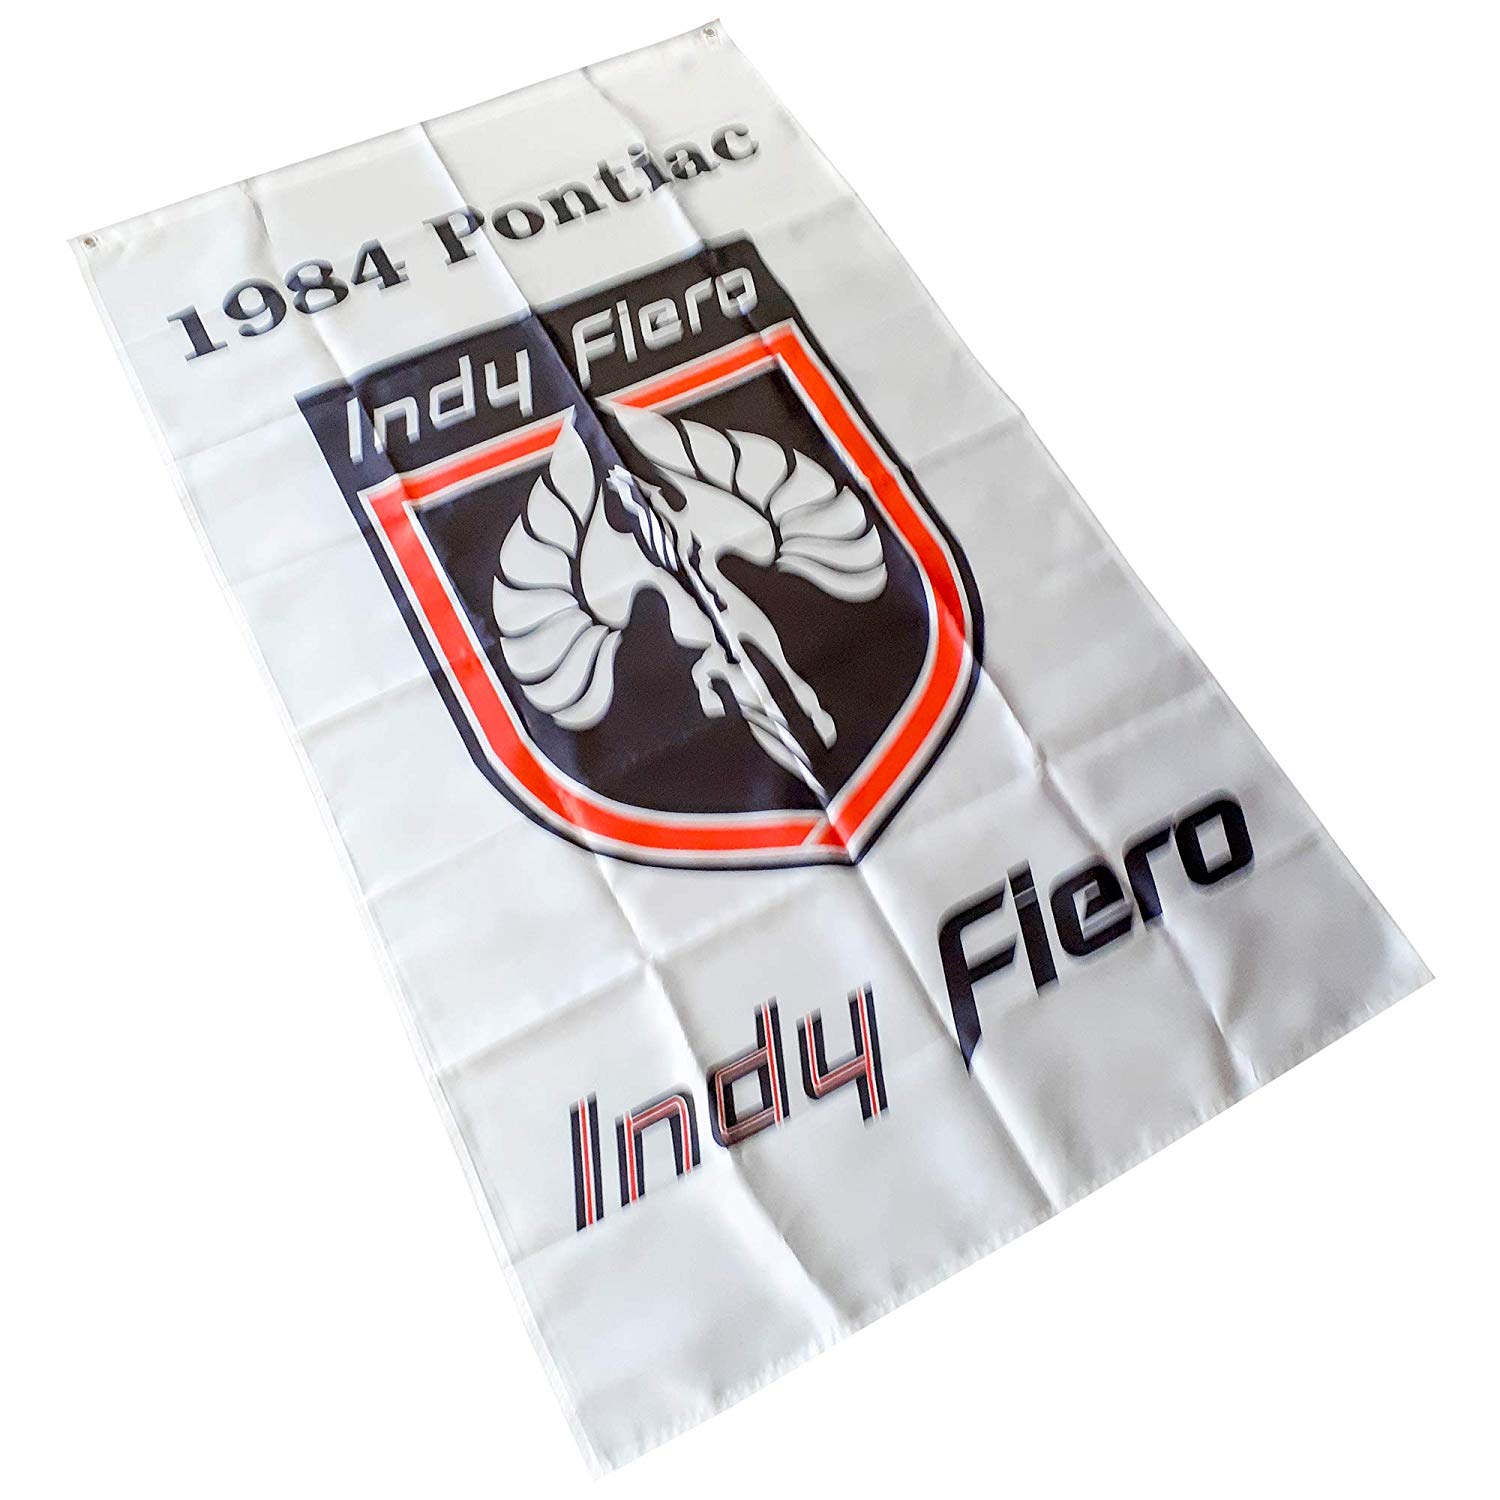 Pontiac Indy Fiero Garage Flag